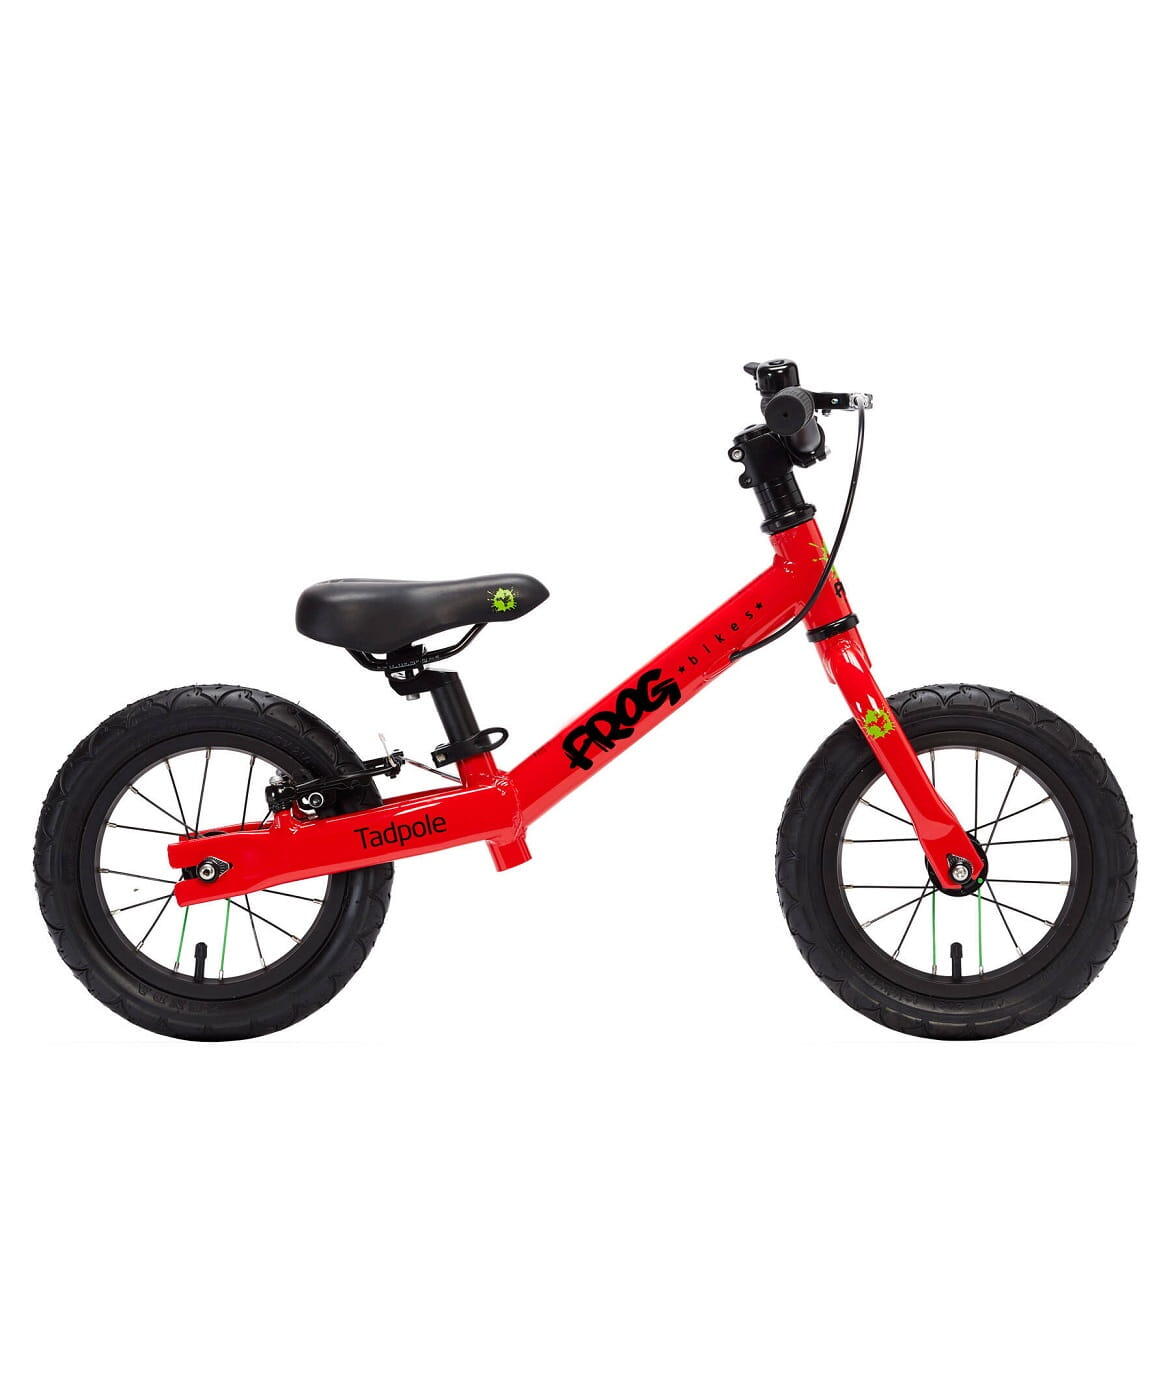 FROG BIKES Tadpole 12 Inch Lightweight Kids Balance Bike For 2-3 Years - Red